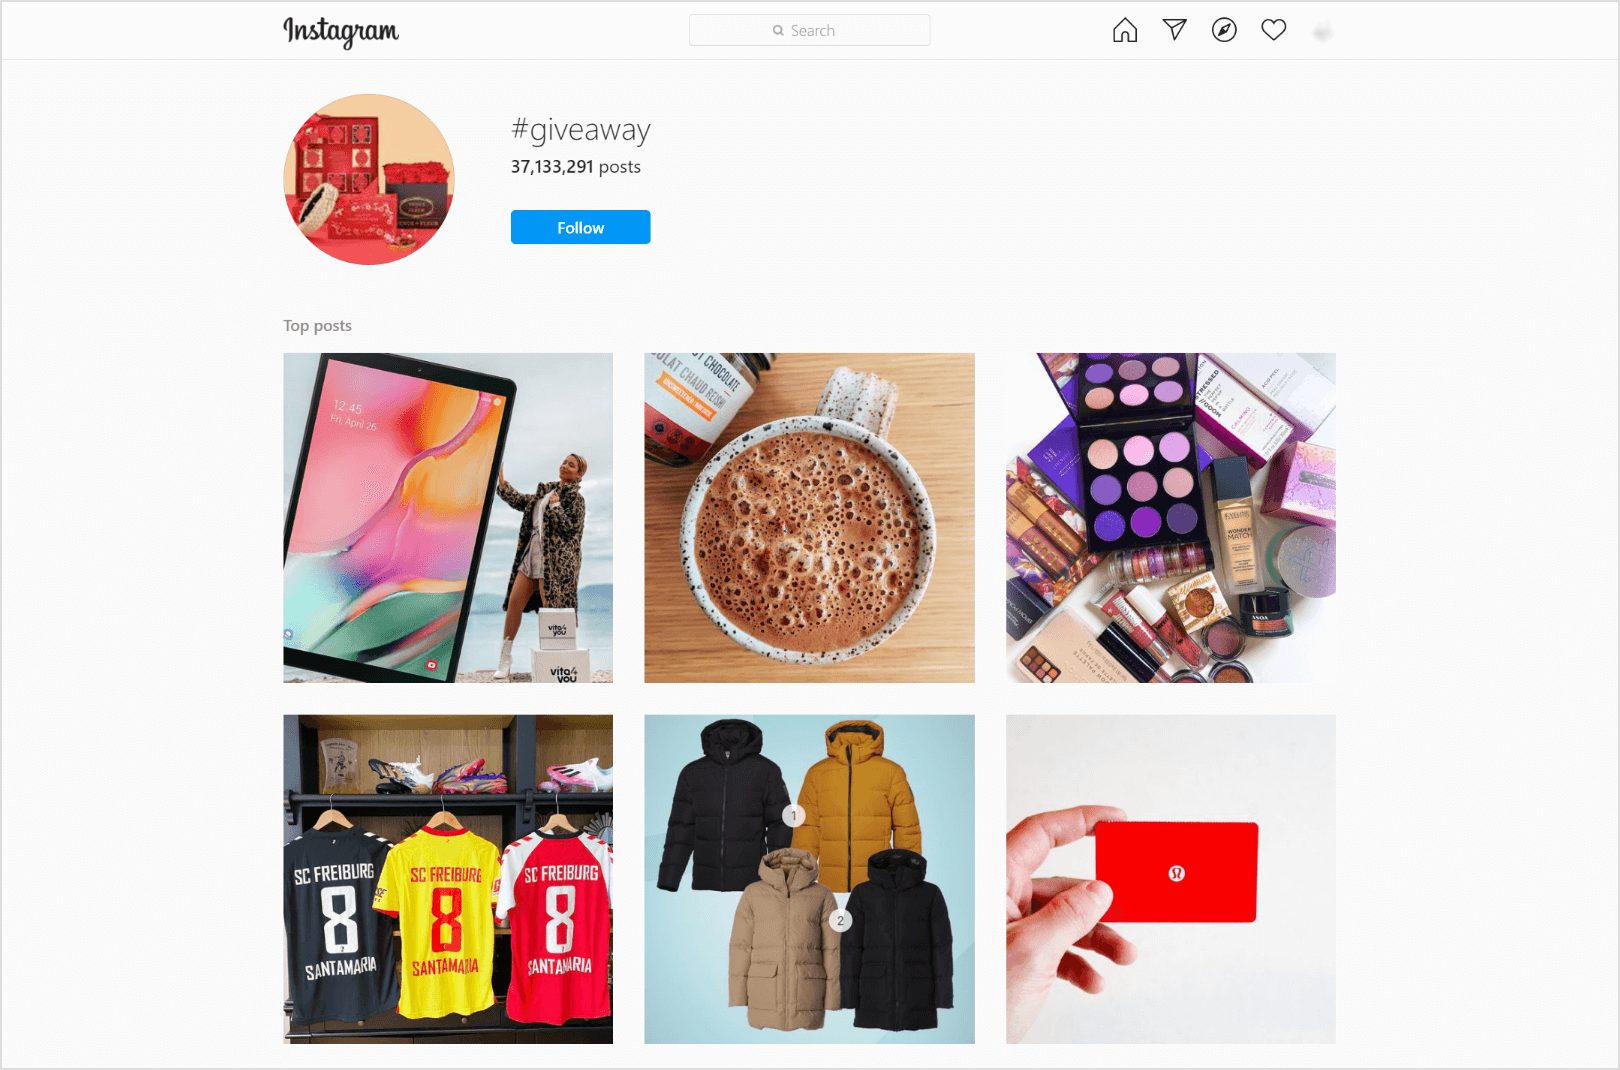 Giveaway-hashtag-Instagram-screenshot